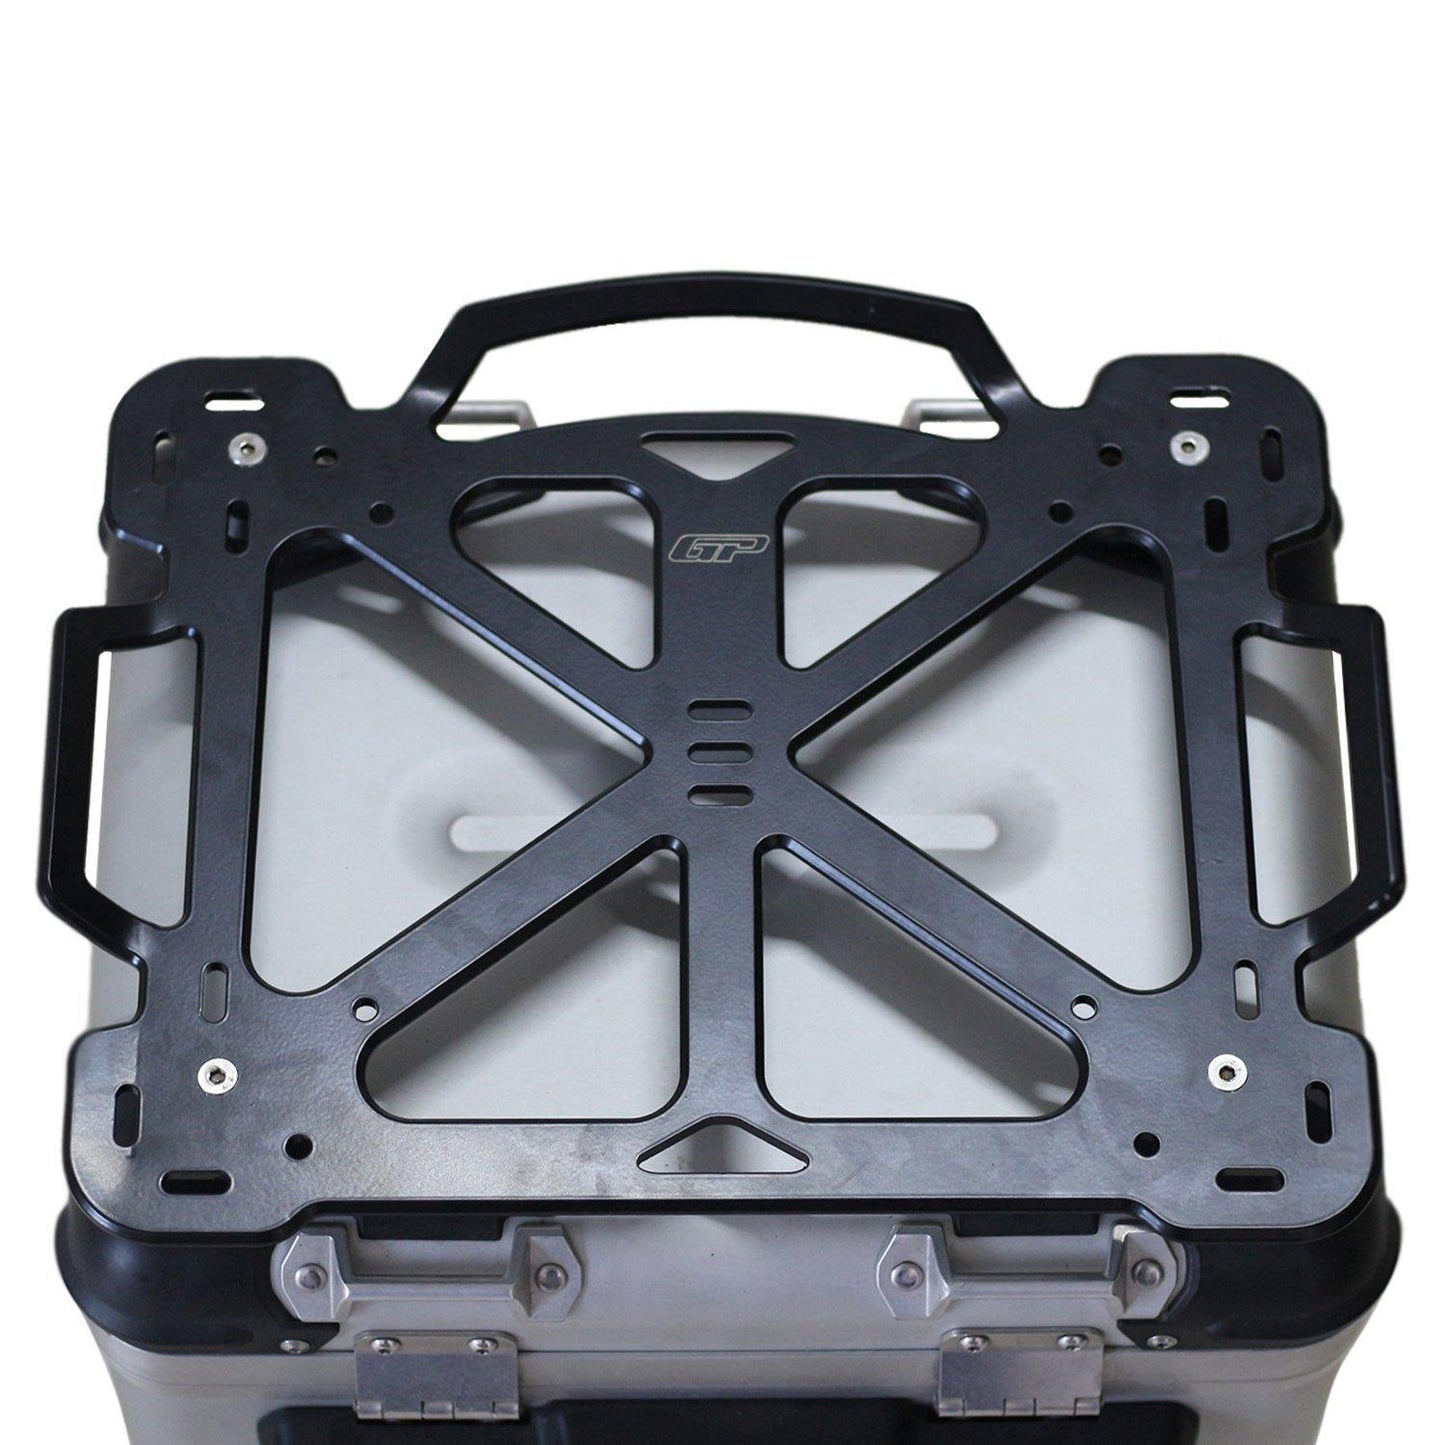 Top box rack luggage rack grid extra carrier shelf aluminum